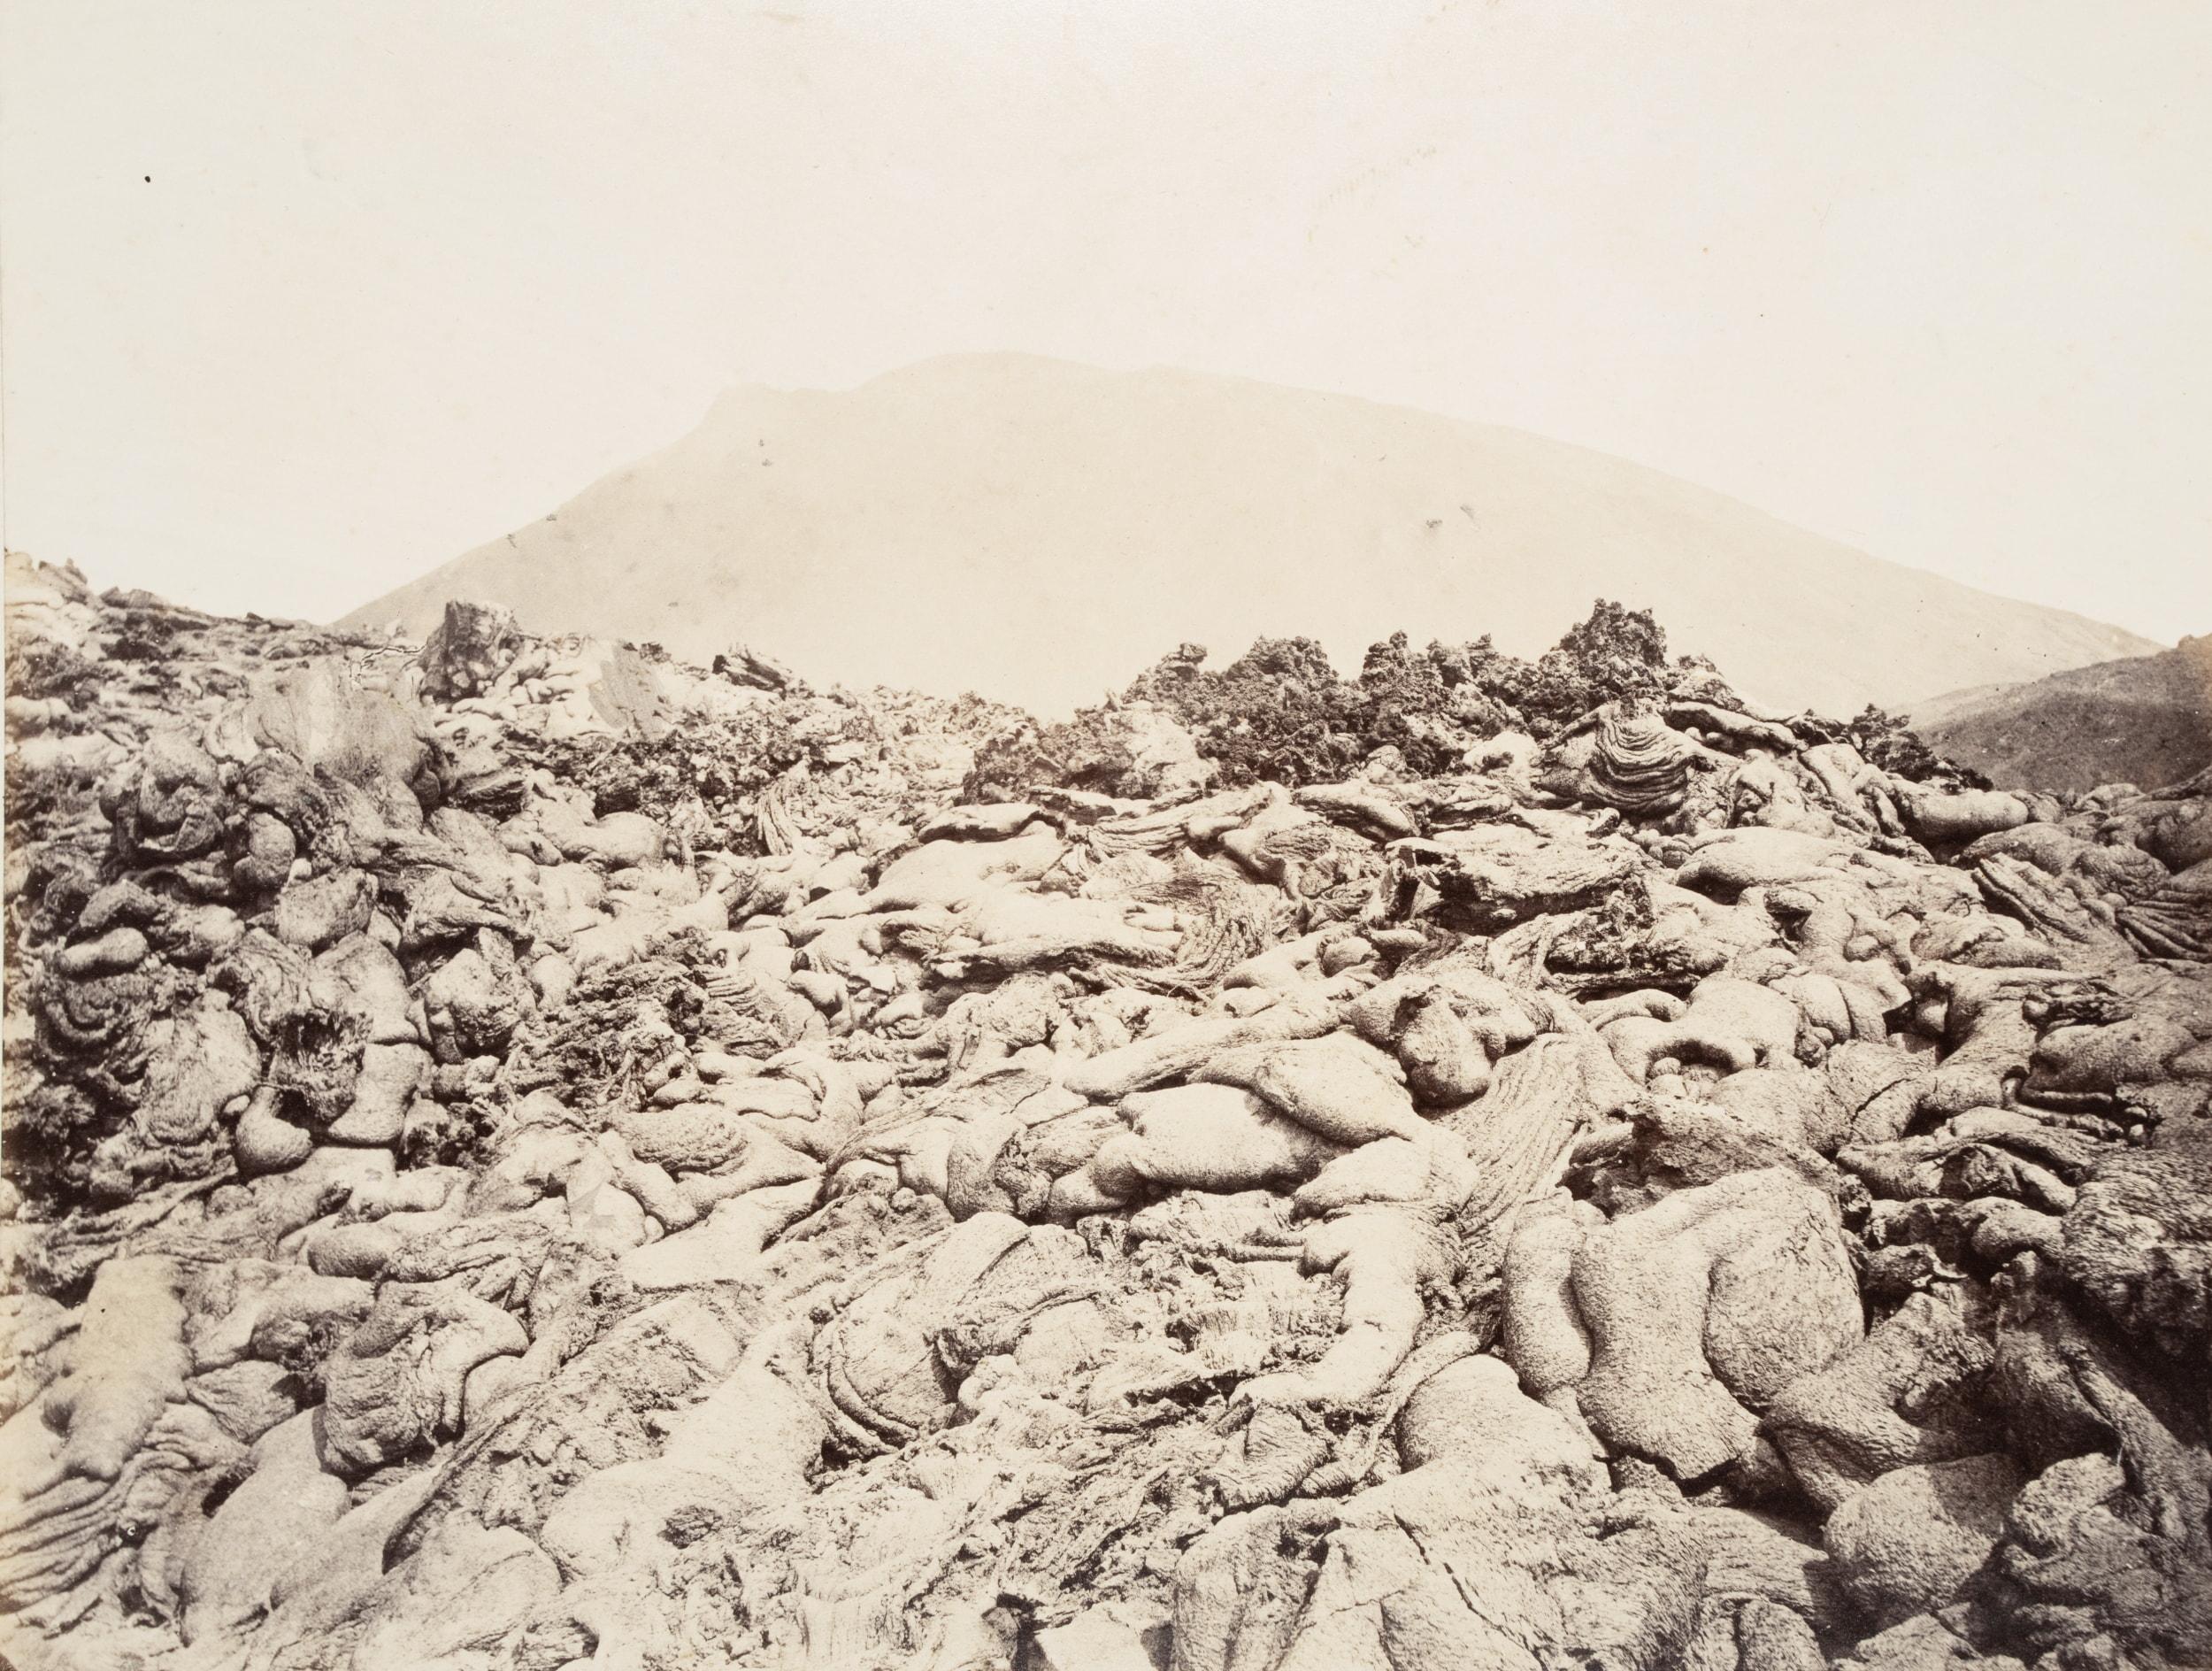 Unknown Landscape Photograph - Mountain top with lava of Vesuvius